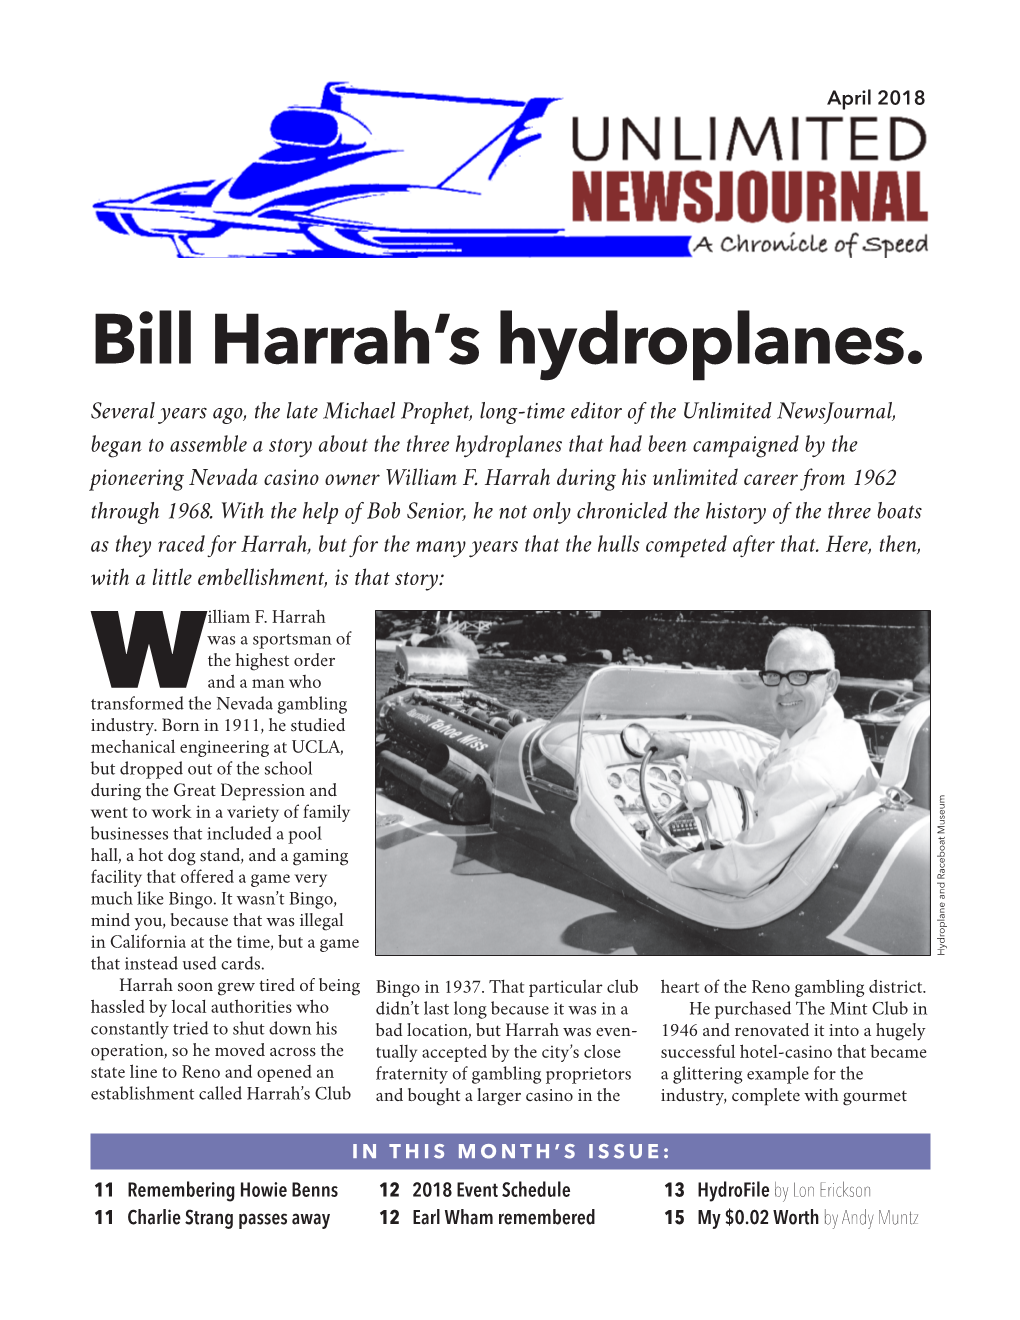 Bill Harrah's Hydroplanes